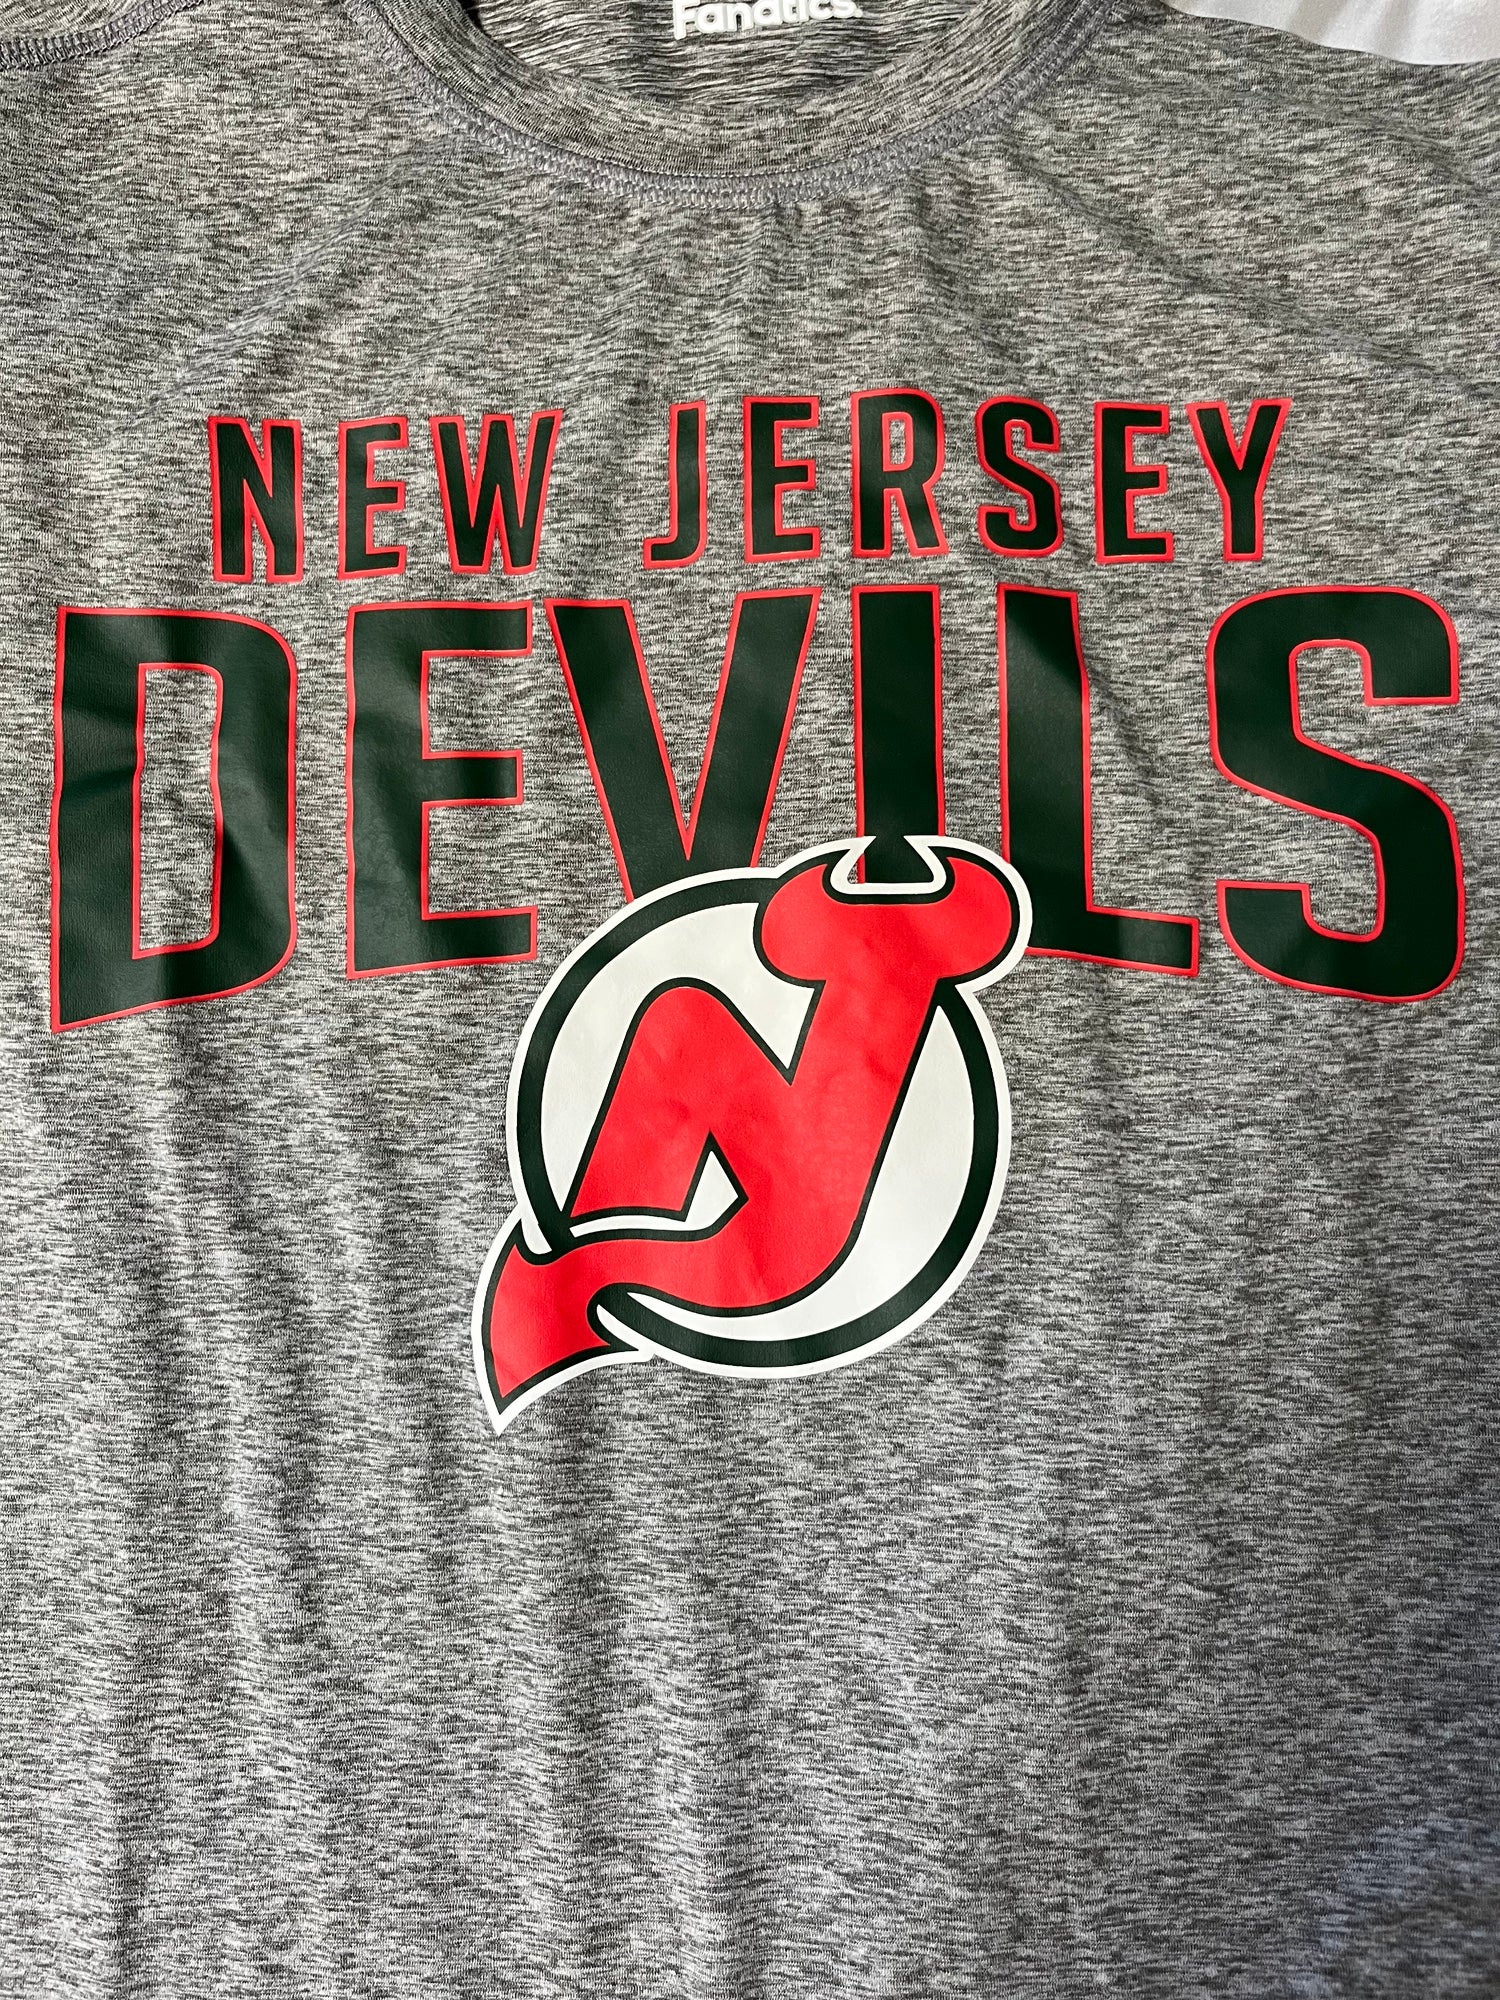 Fanatics Accidentally Make Perfect New Jersey Devils Mickey Mouse Shirt